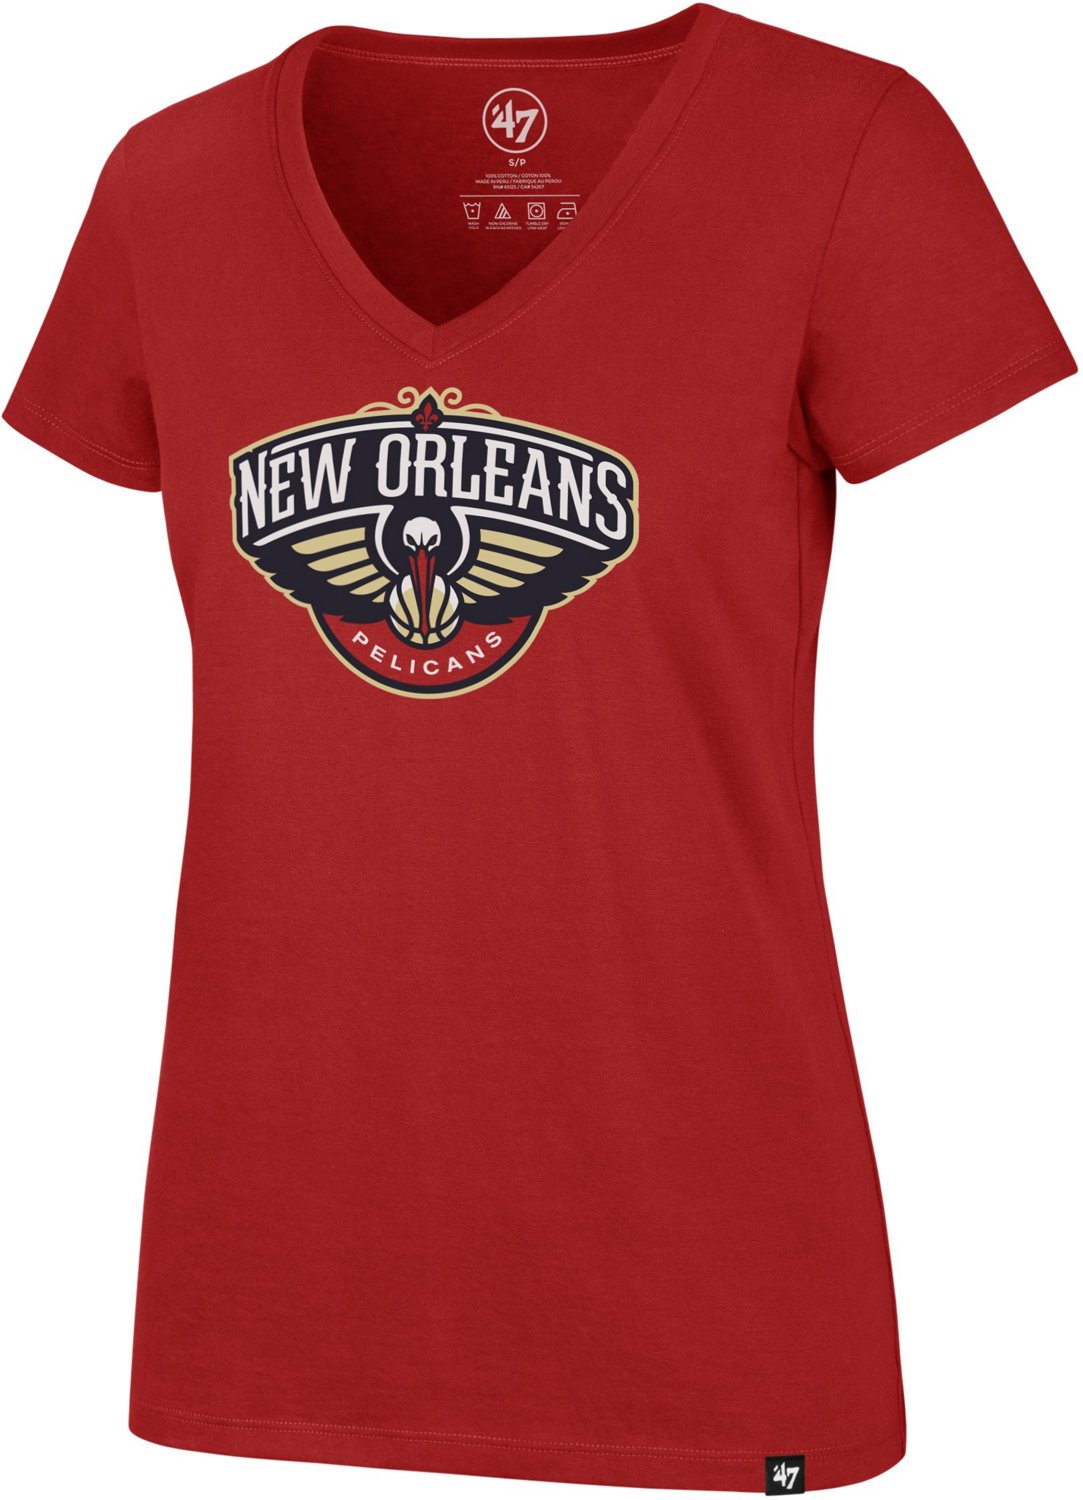 '47 New Orleans Pelicans Women's Imprint V-neck T-shirt | Academy